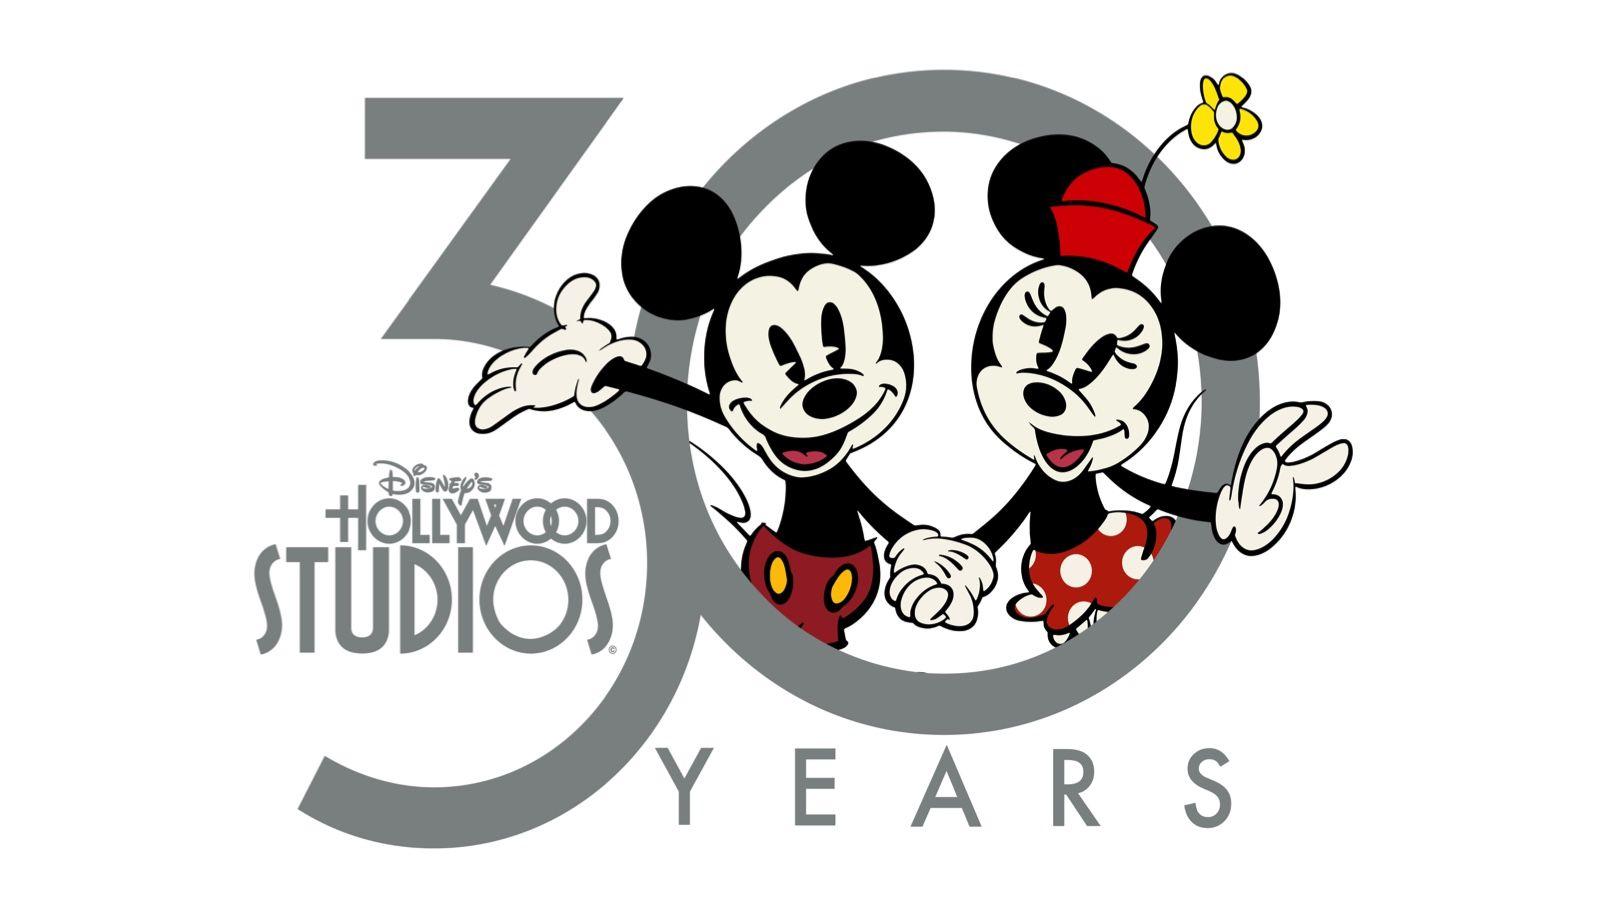 The Walt Disney Studios Logo - Disney's Hollywood Studios Celebrates Its 30th with New Logo